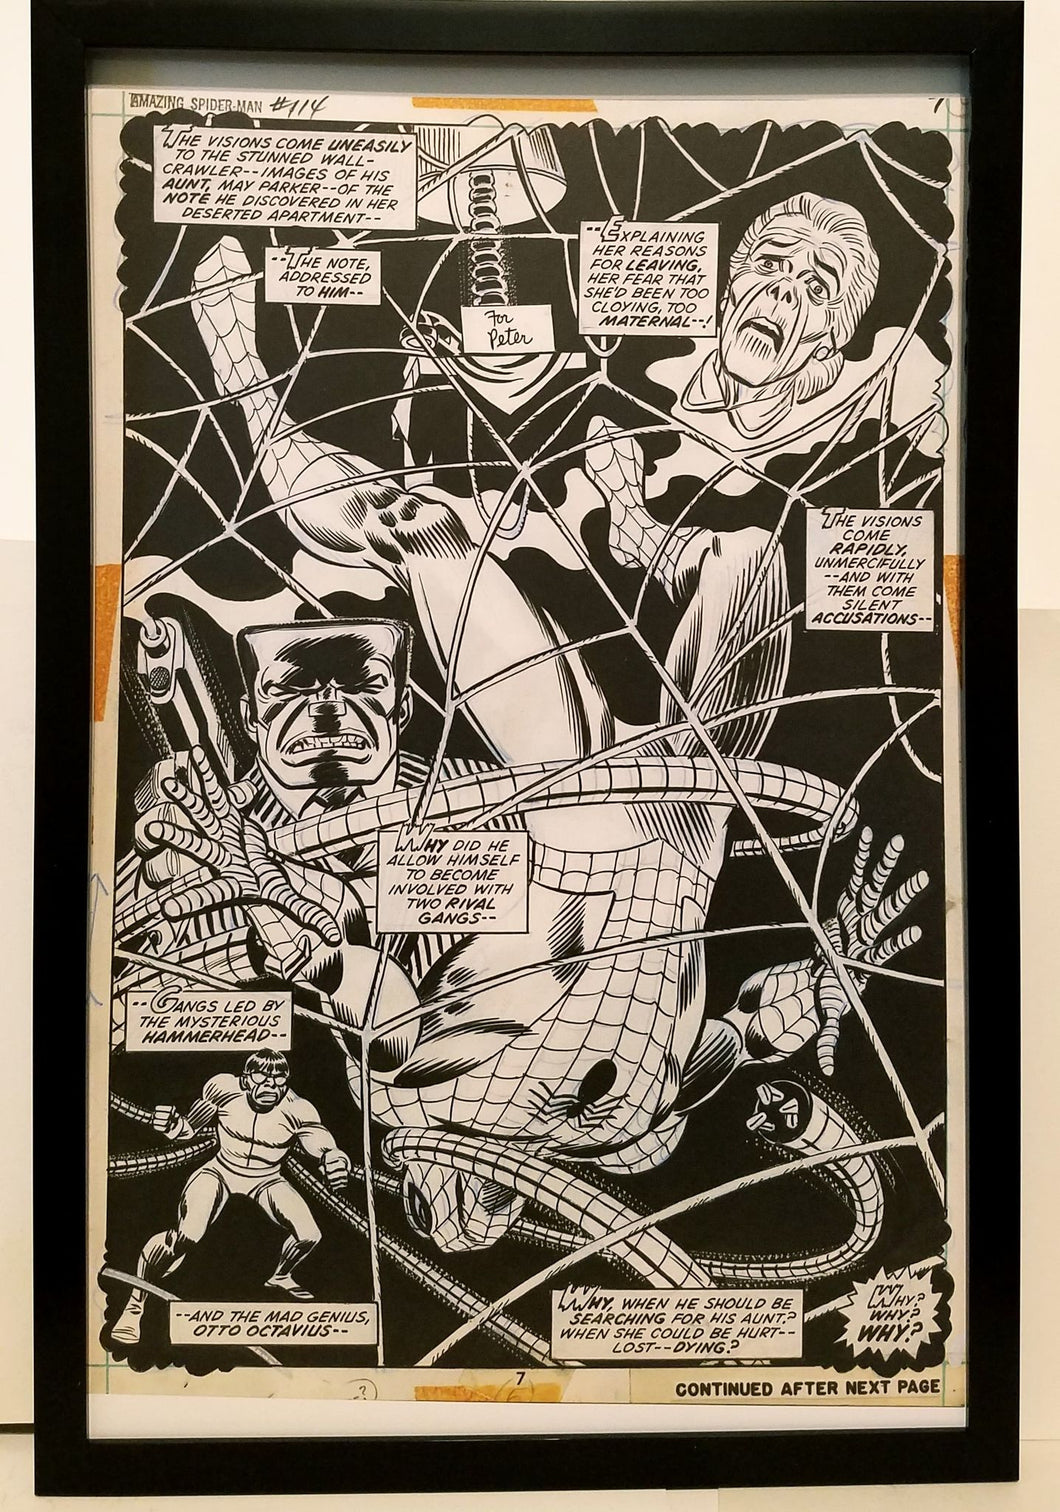 Amazing Spider-Man #114 pg. 7 11x17 FRAMED Original Art Poster Marvel Comics